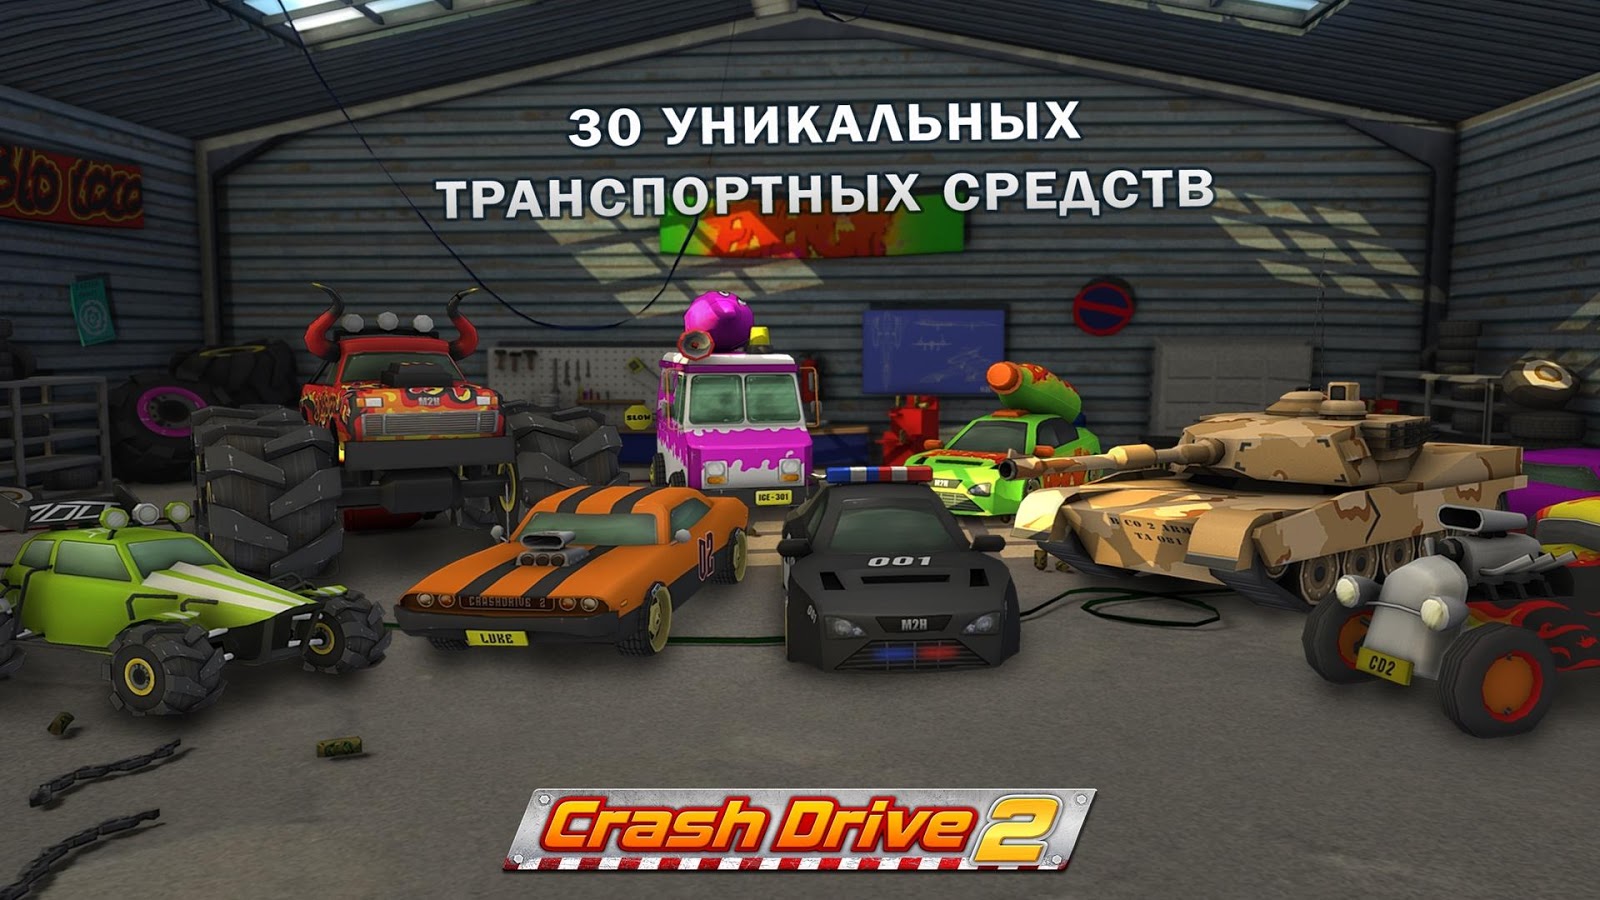 Crash Drive 2 3.94